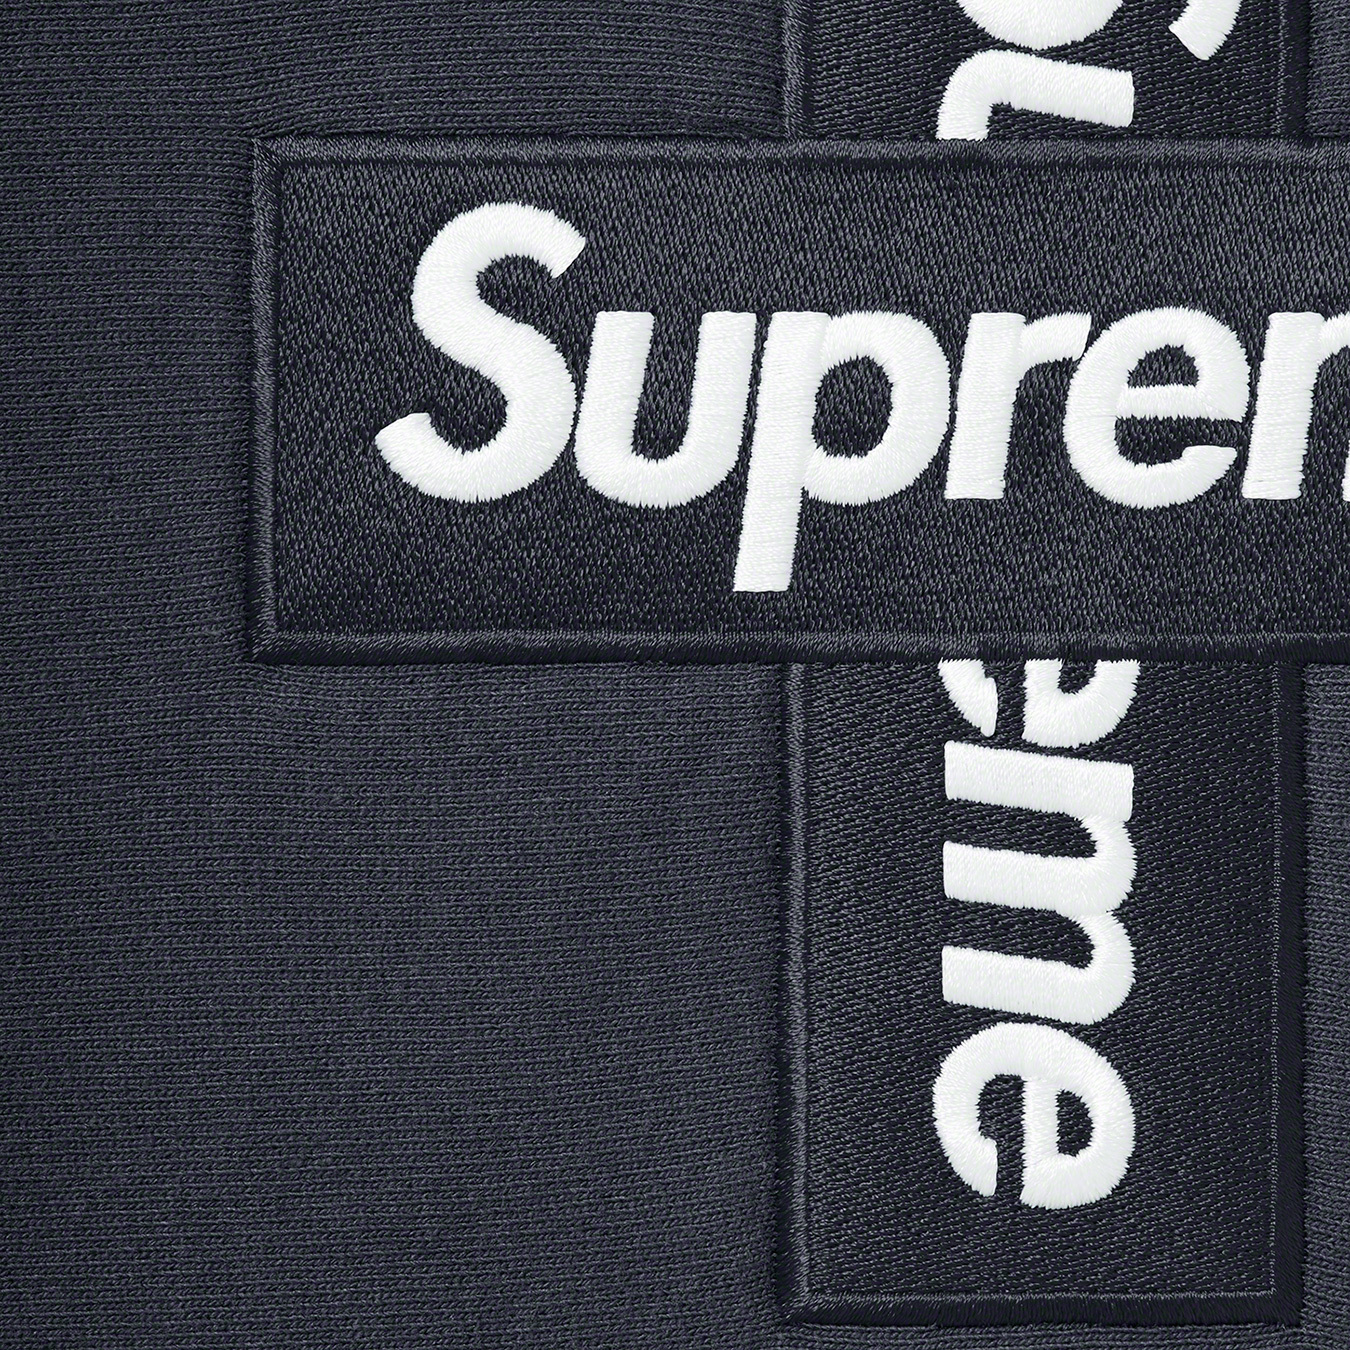 Supreme Denim Logo Hooded Sweatshirt Black